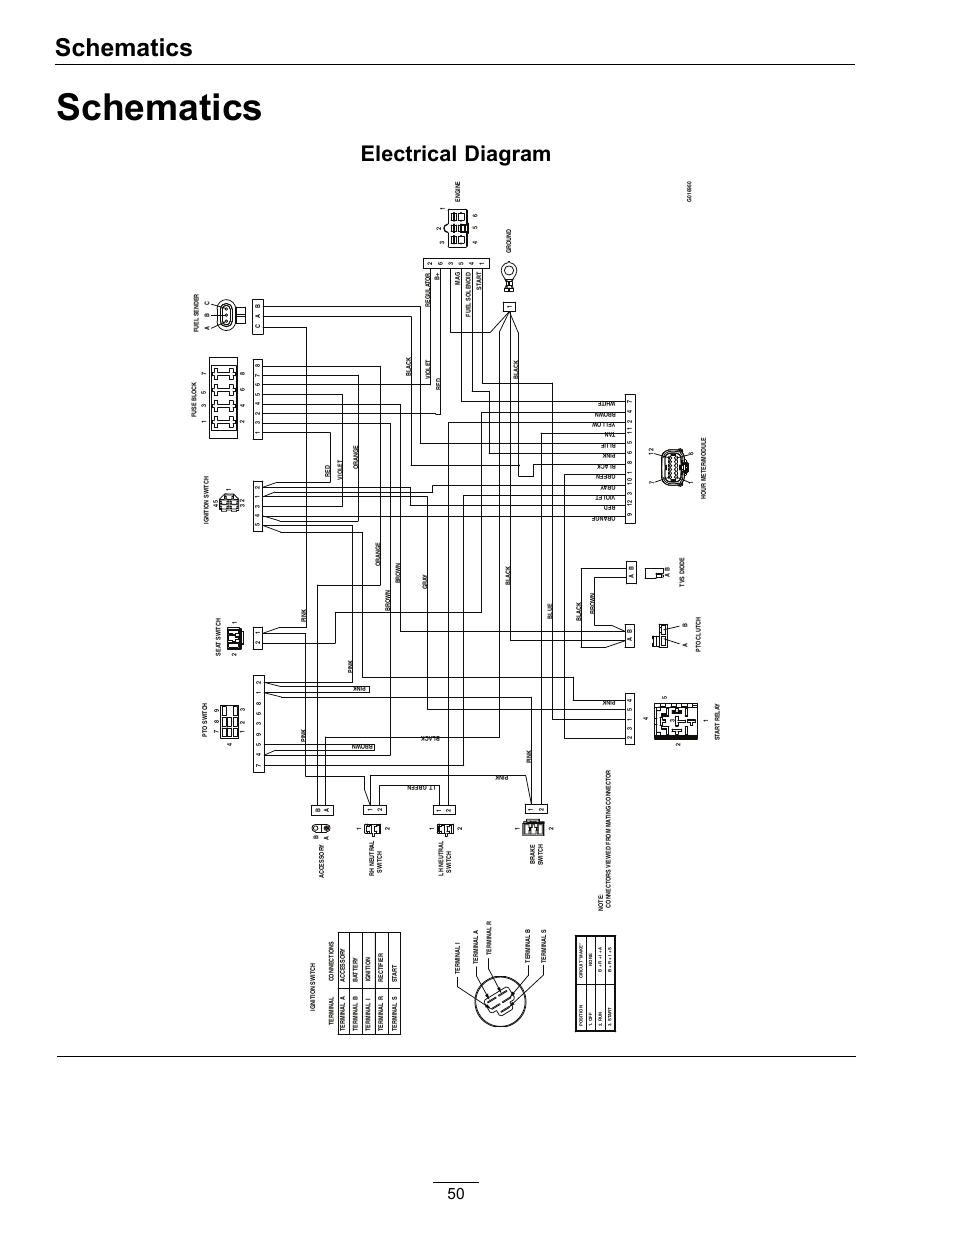 autocall fire alarm wiring diagram